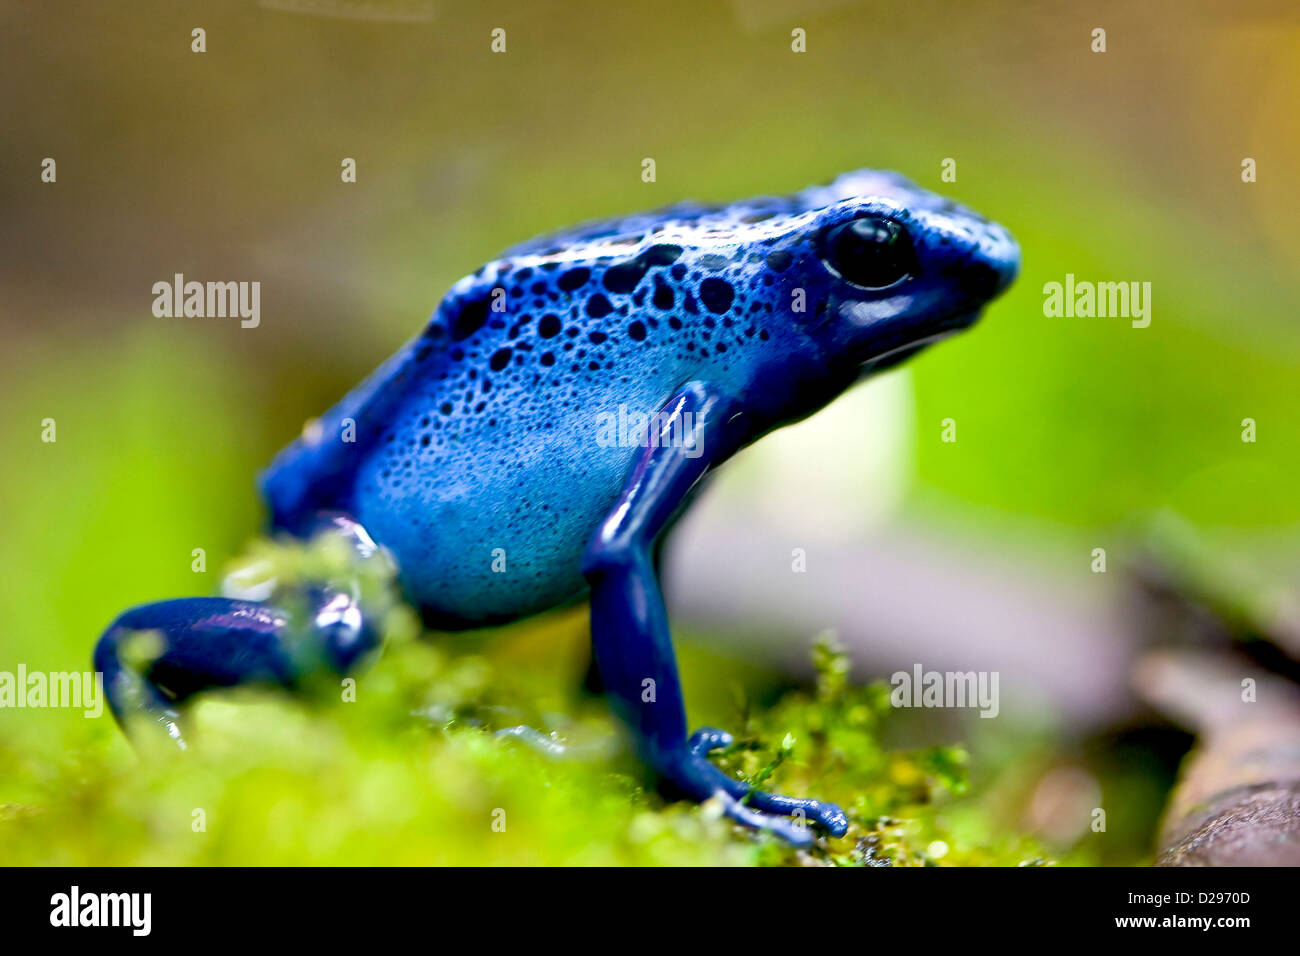 Blue Poison Frog Banque D'Images